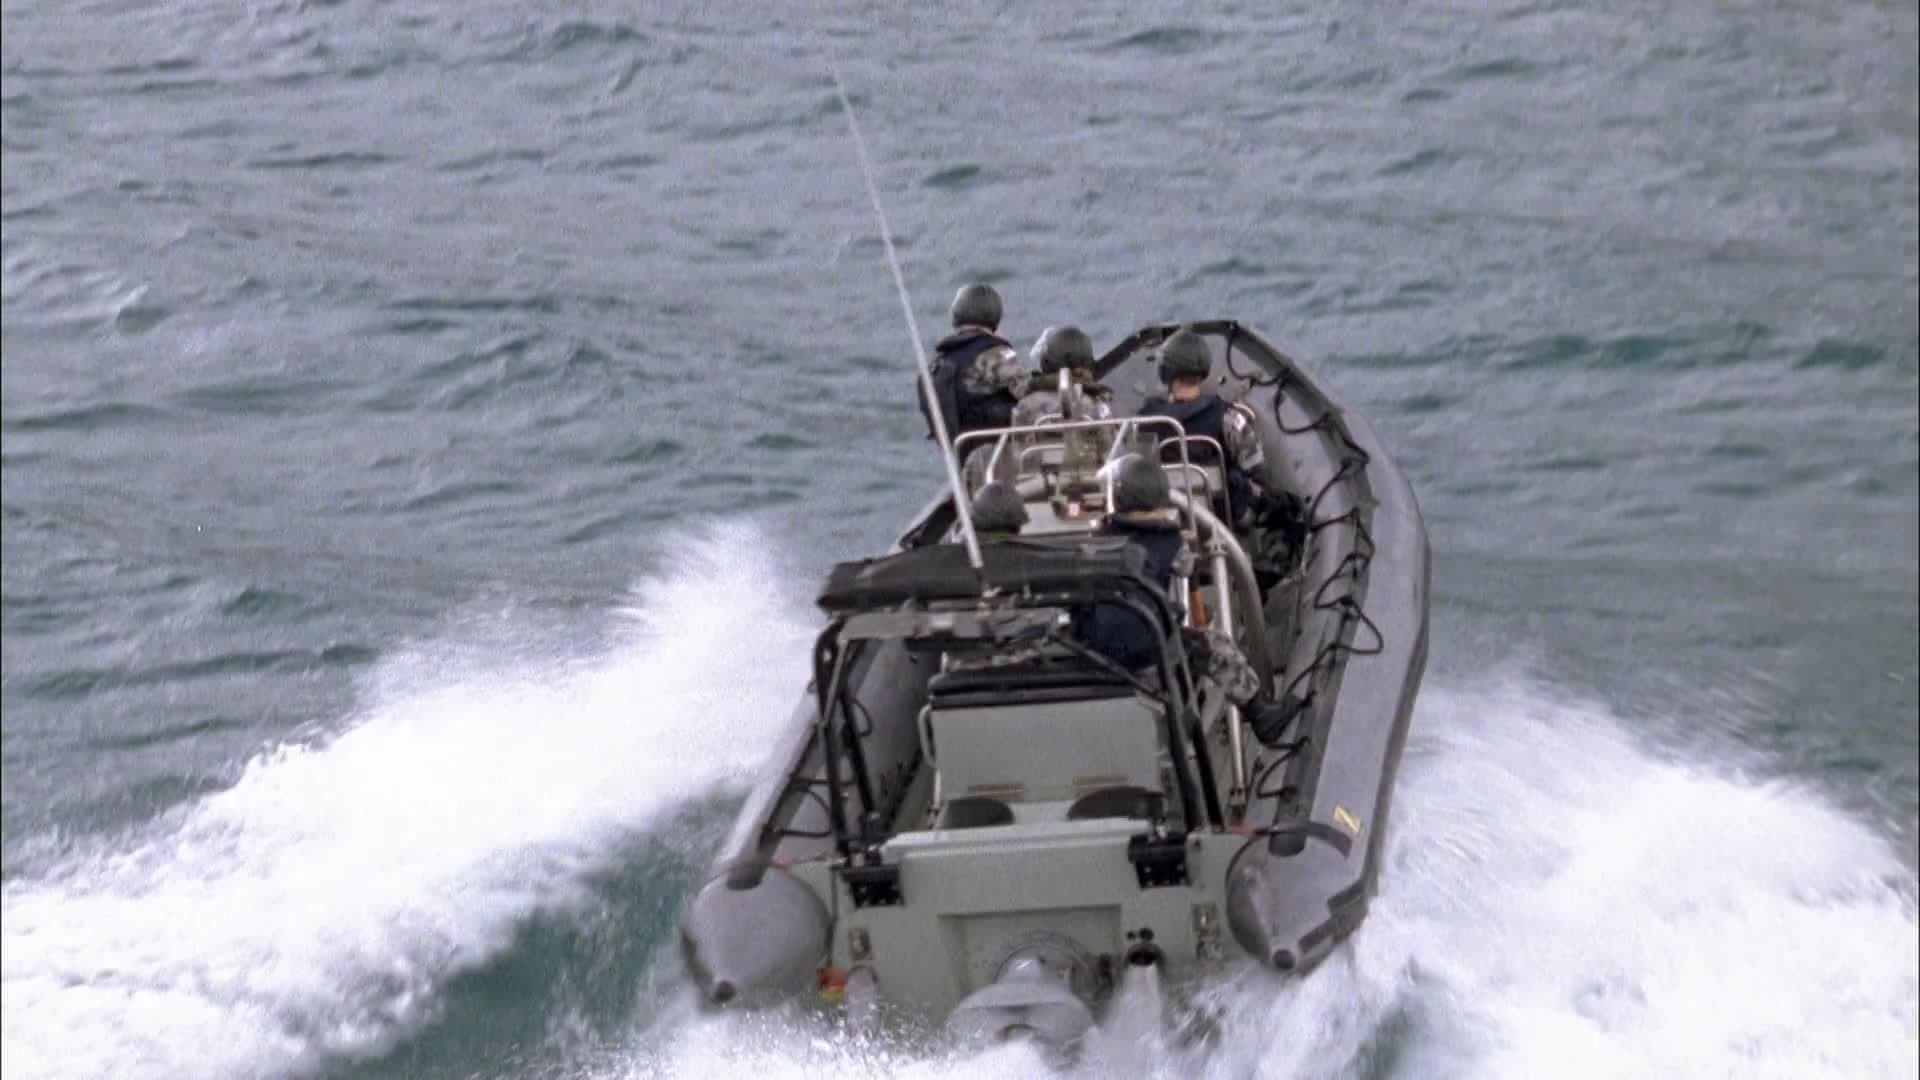 Sea Patrol background